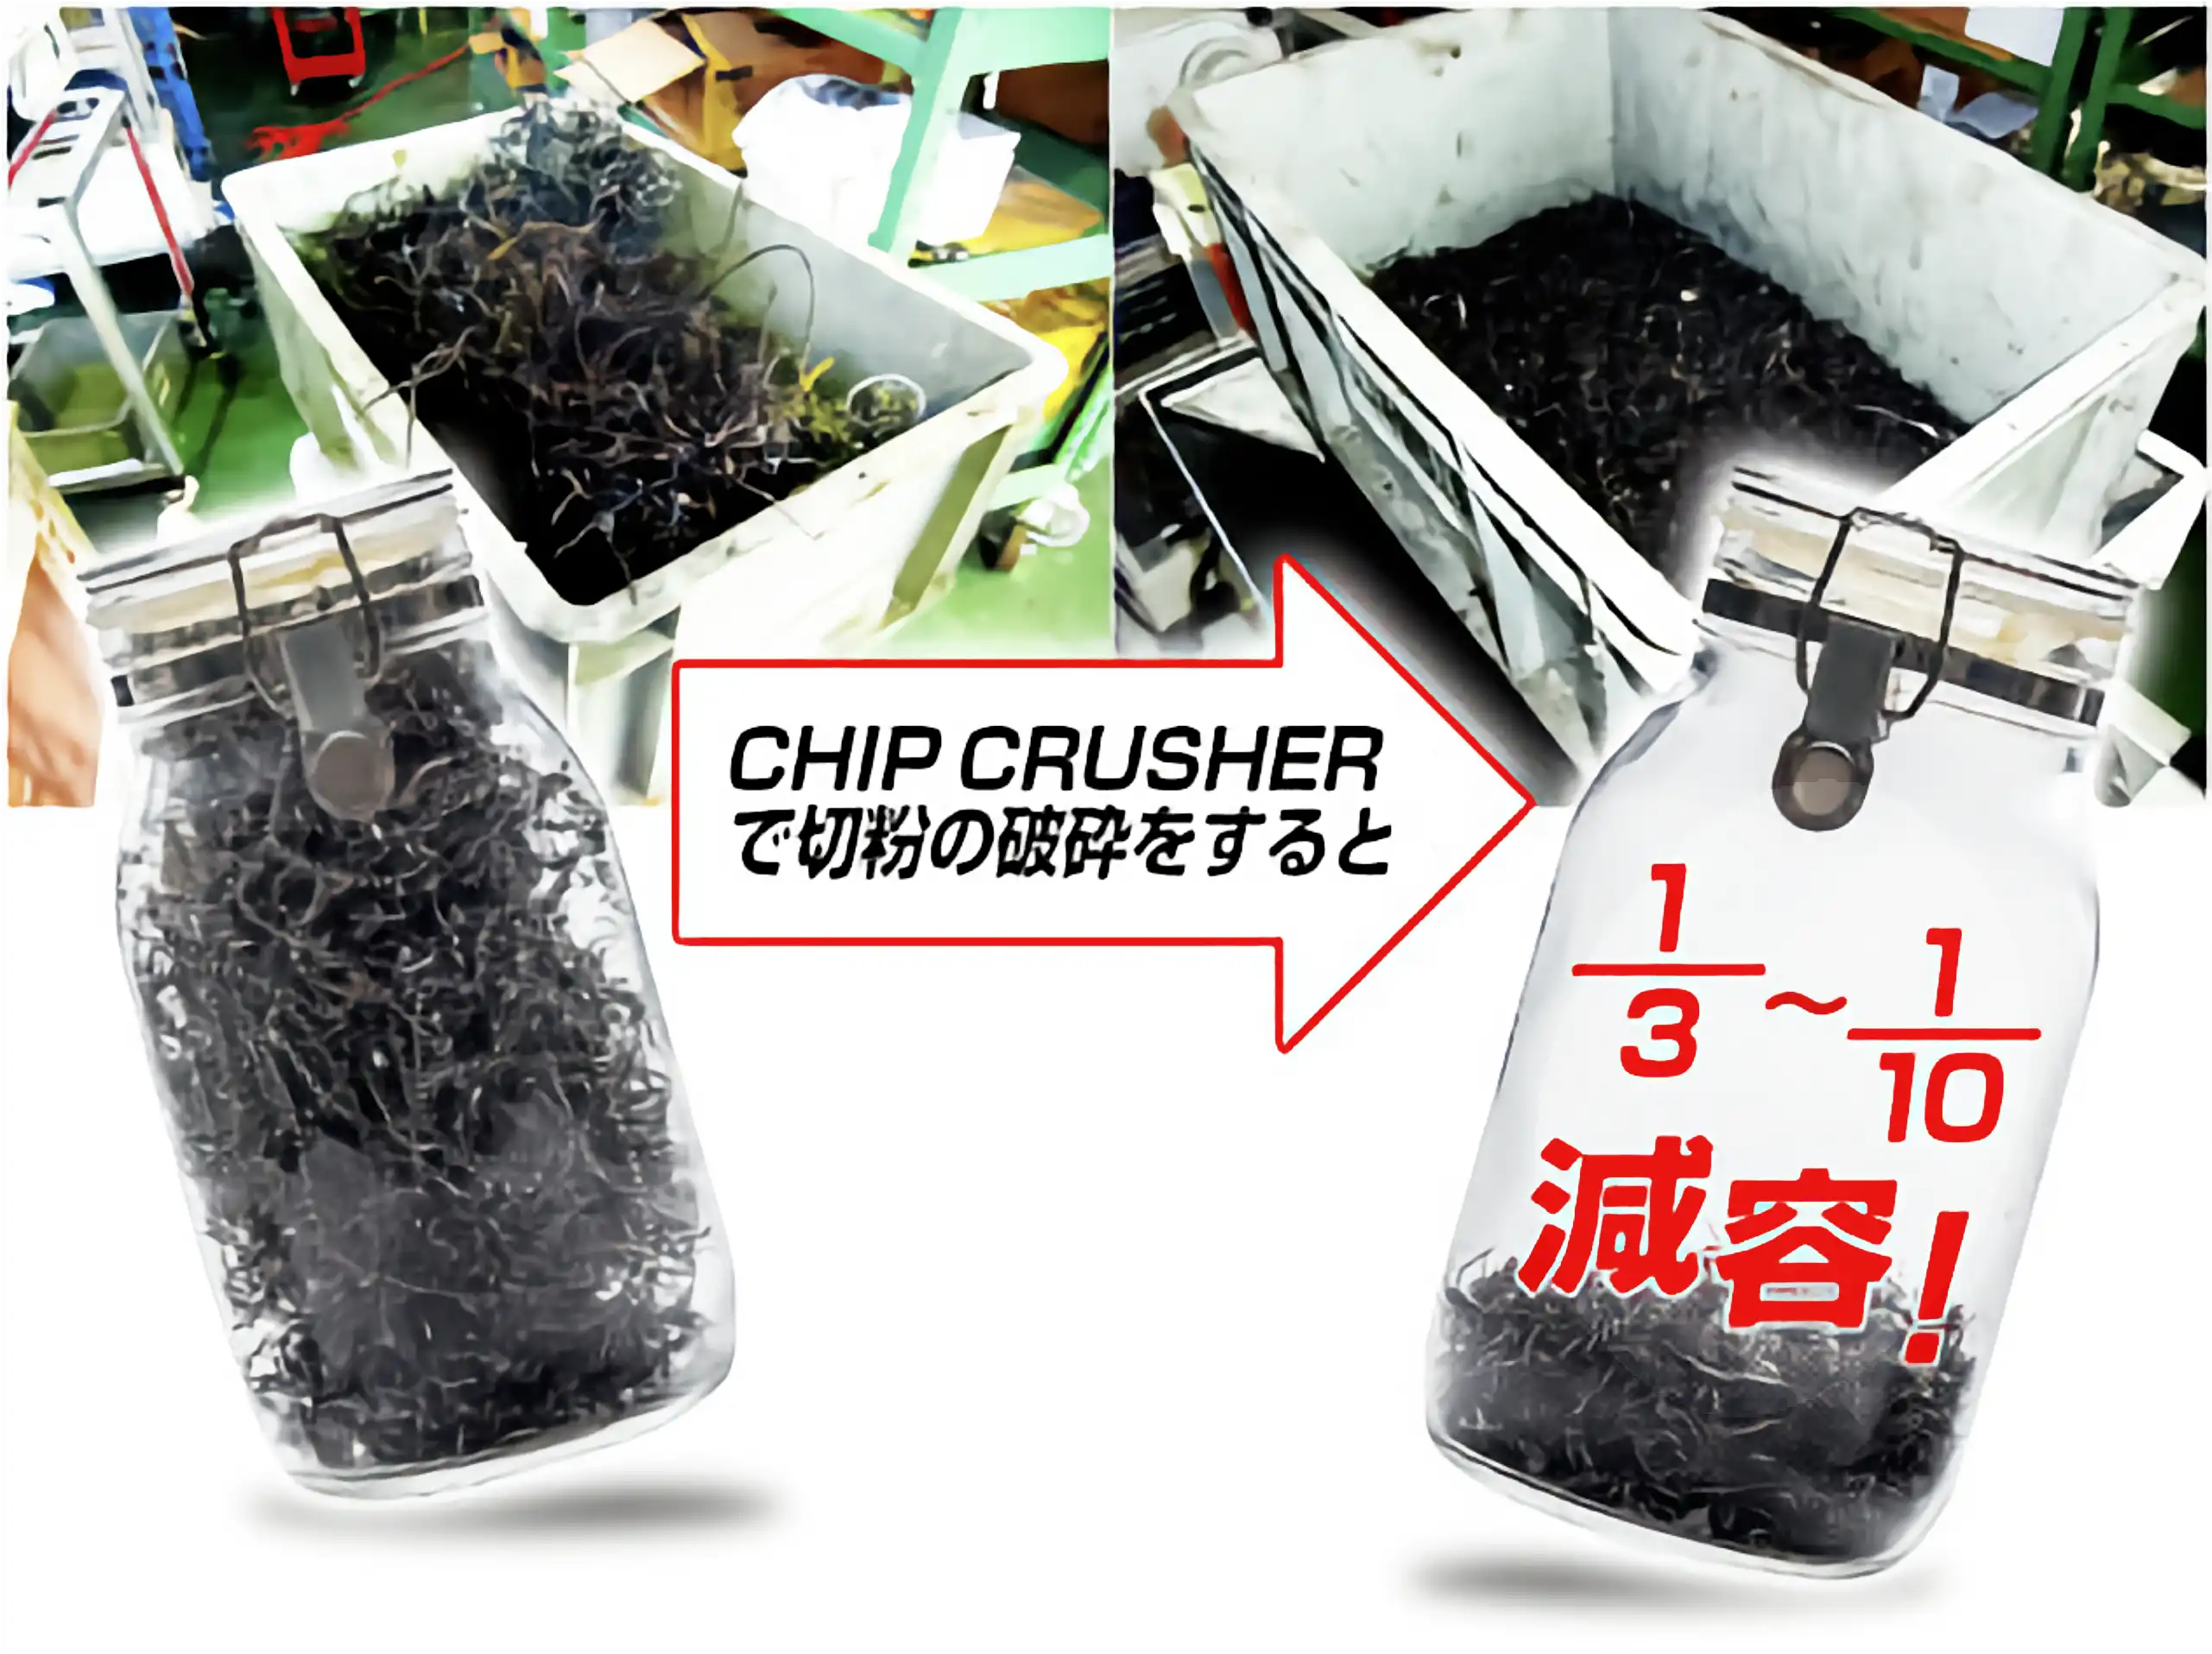 CHIPCRUSHER(チップクラッシャー)で切粉の破砕をすると1/3〜1/10に減容！